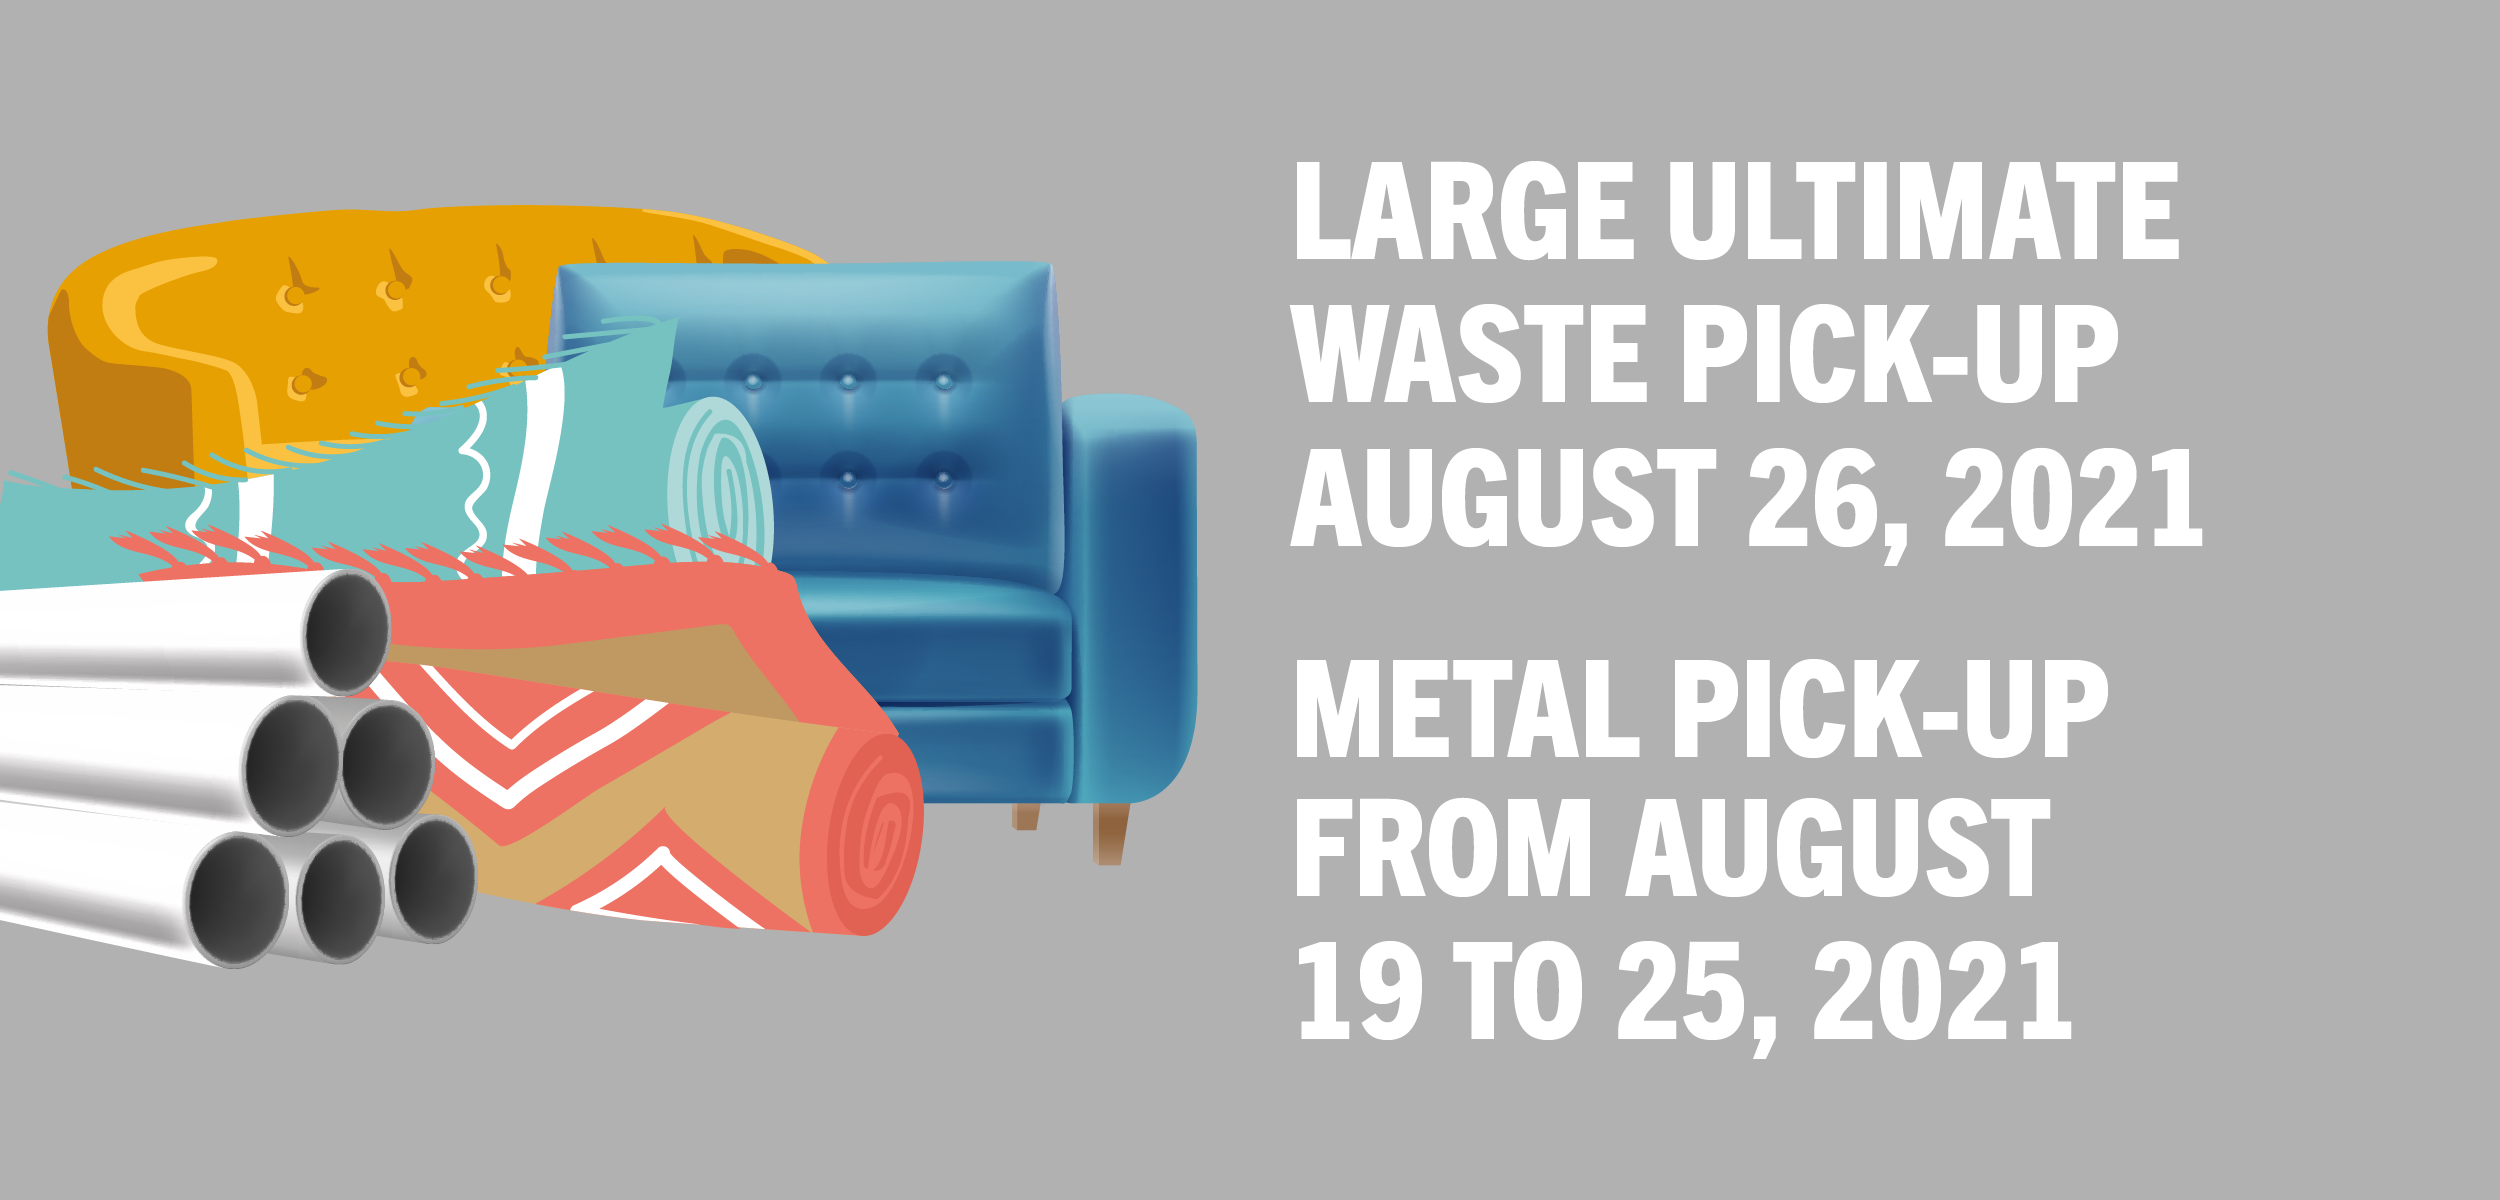 Large ultimate waste pick-up